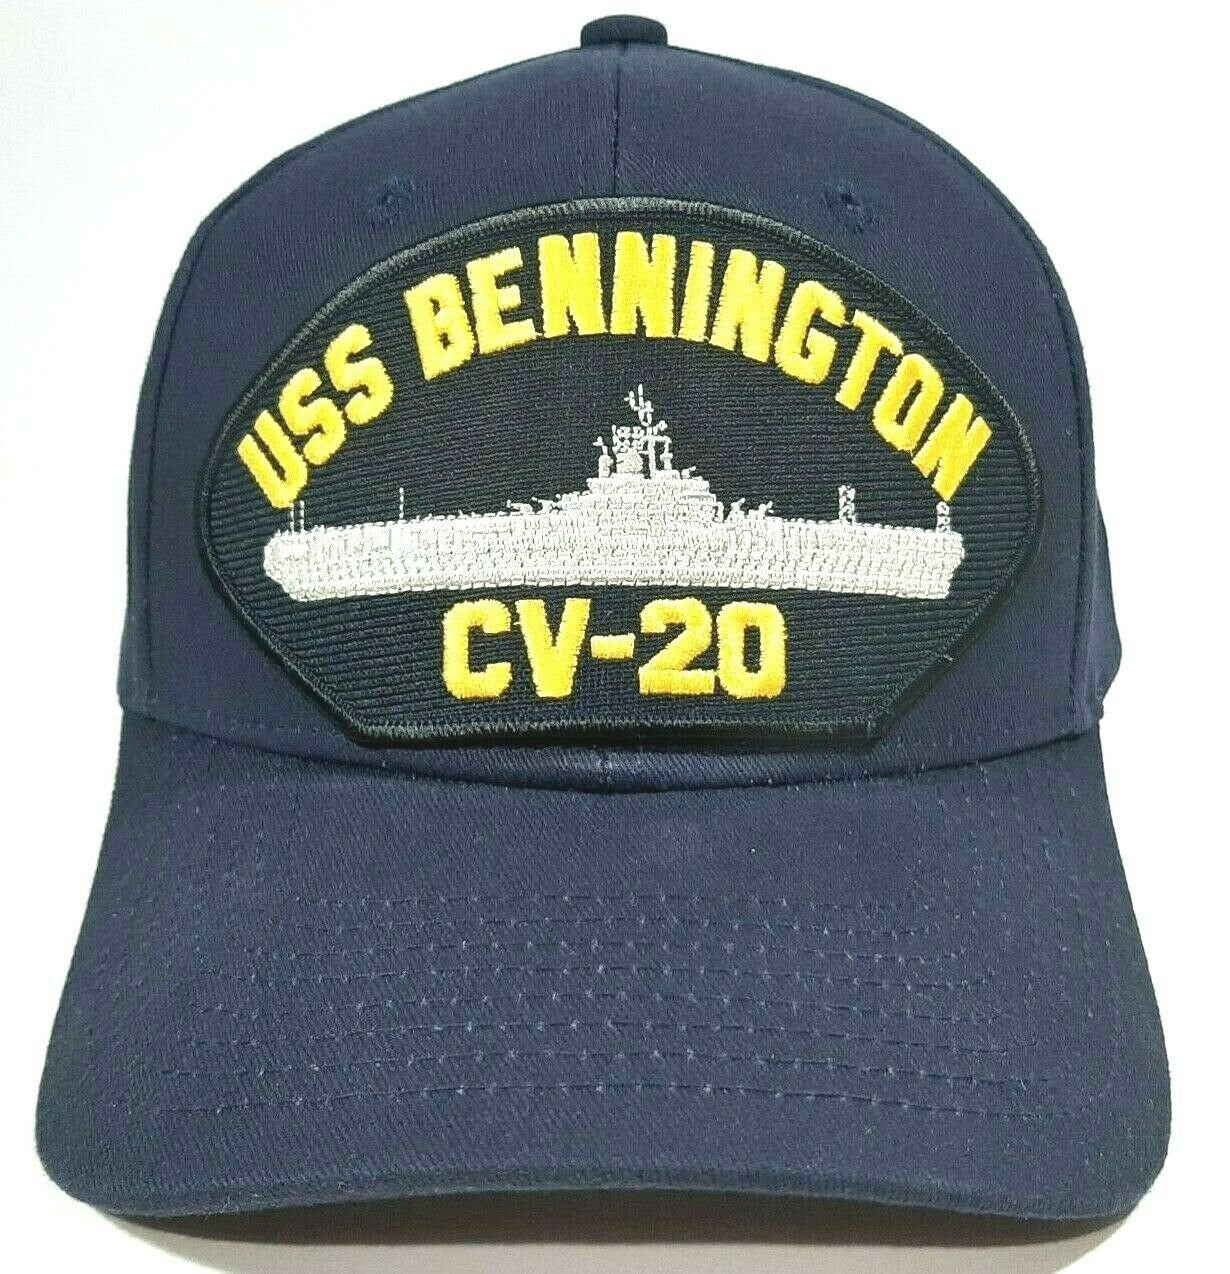 U.S. Navy USS Bennington CV-20 Men's Cap Hat Patch Navy Blue Snapback Acrylic